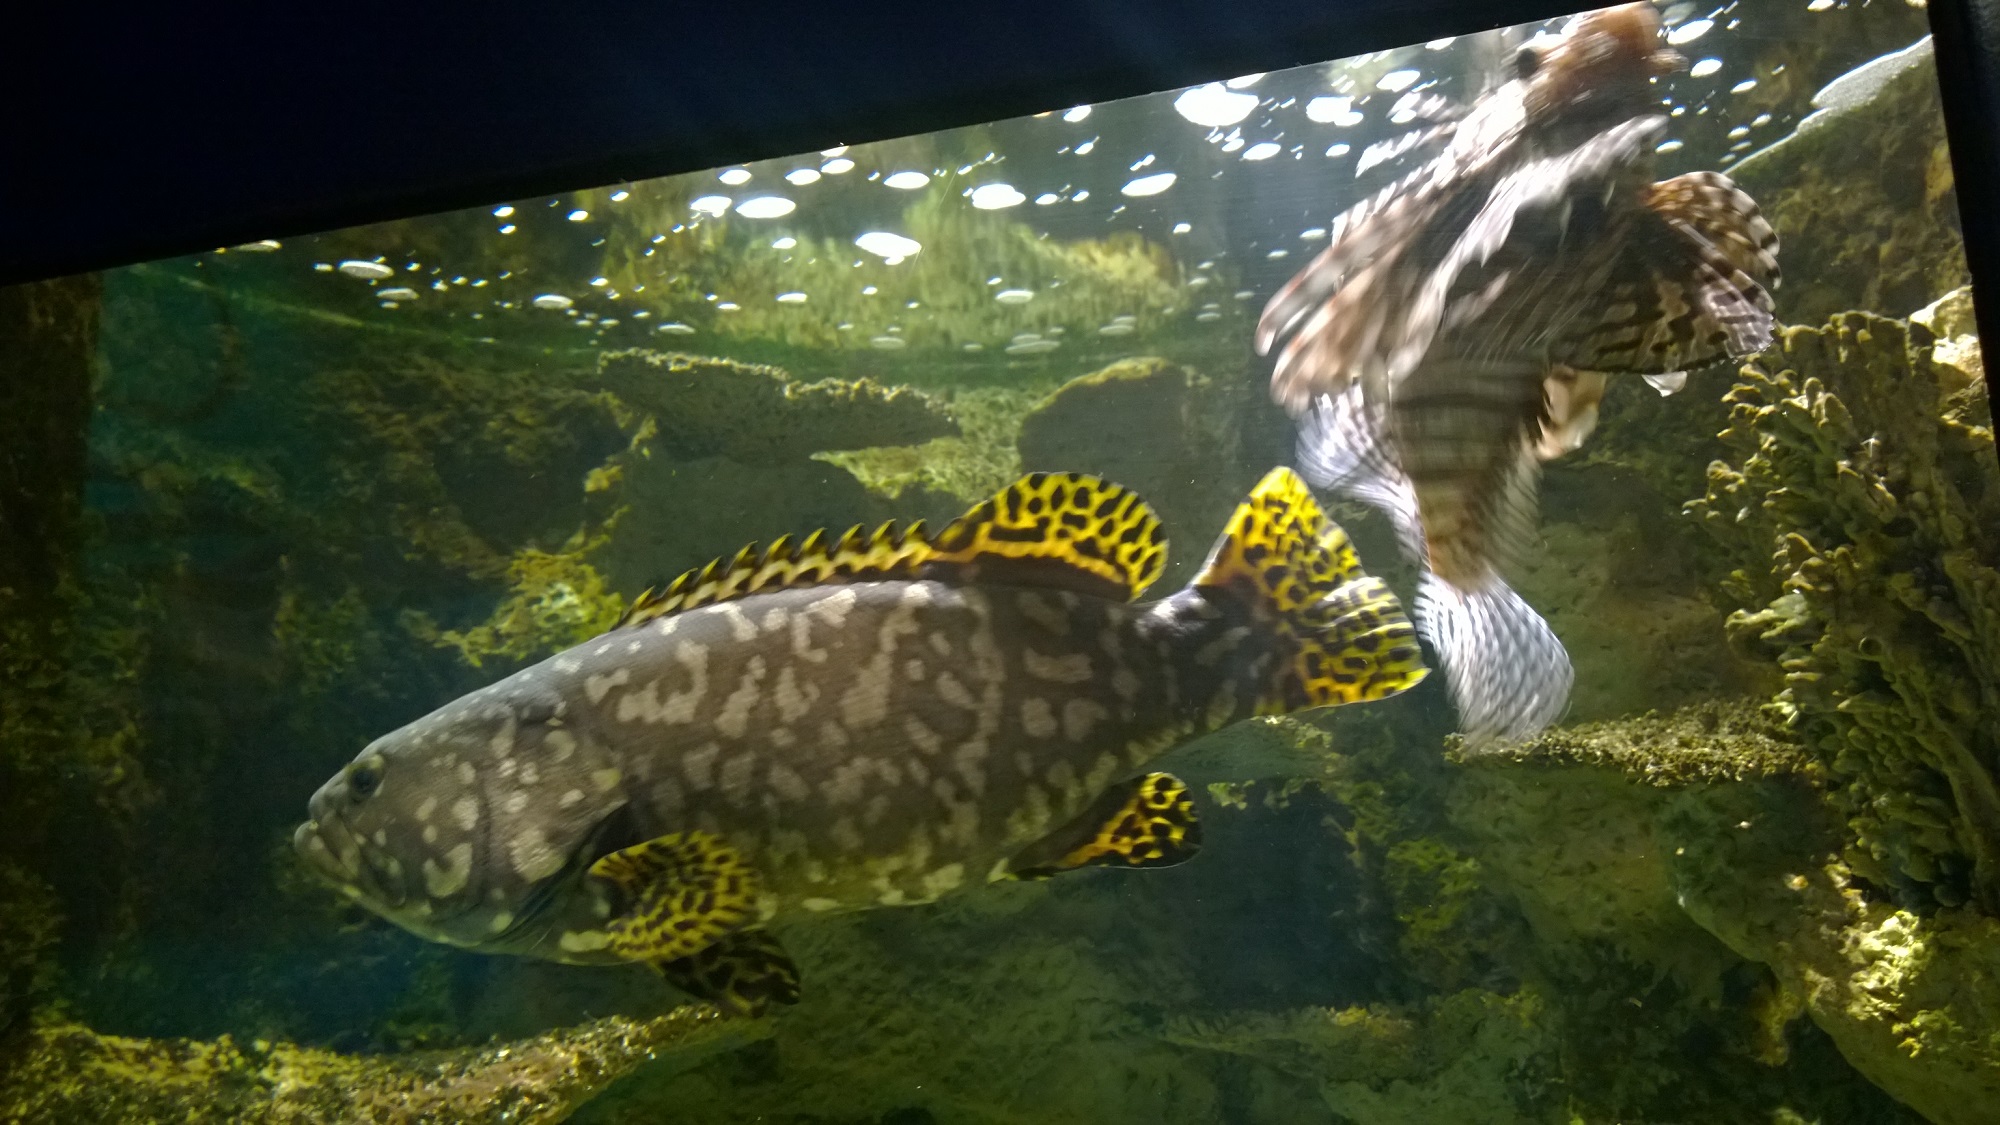 Newport Aquarium 2015